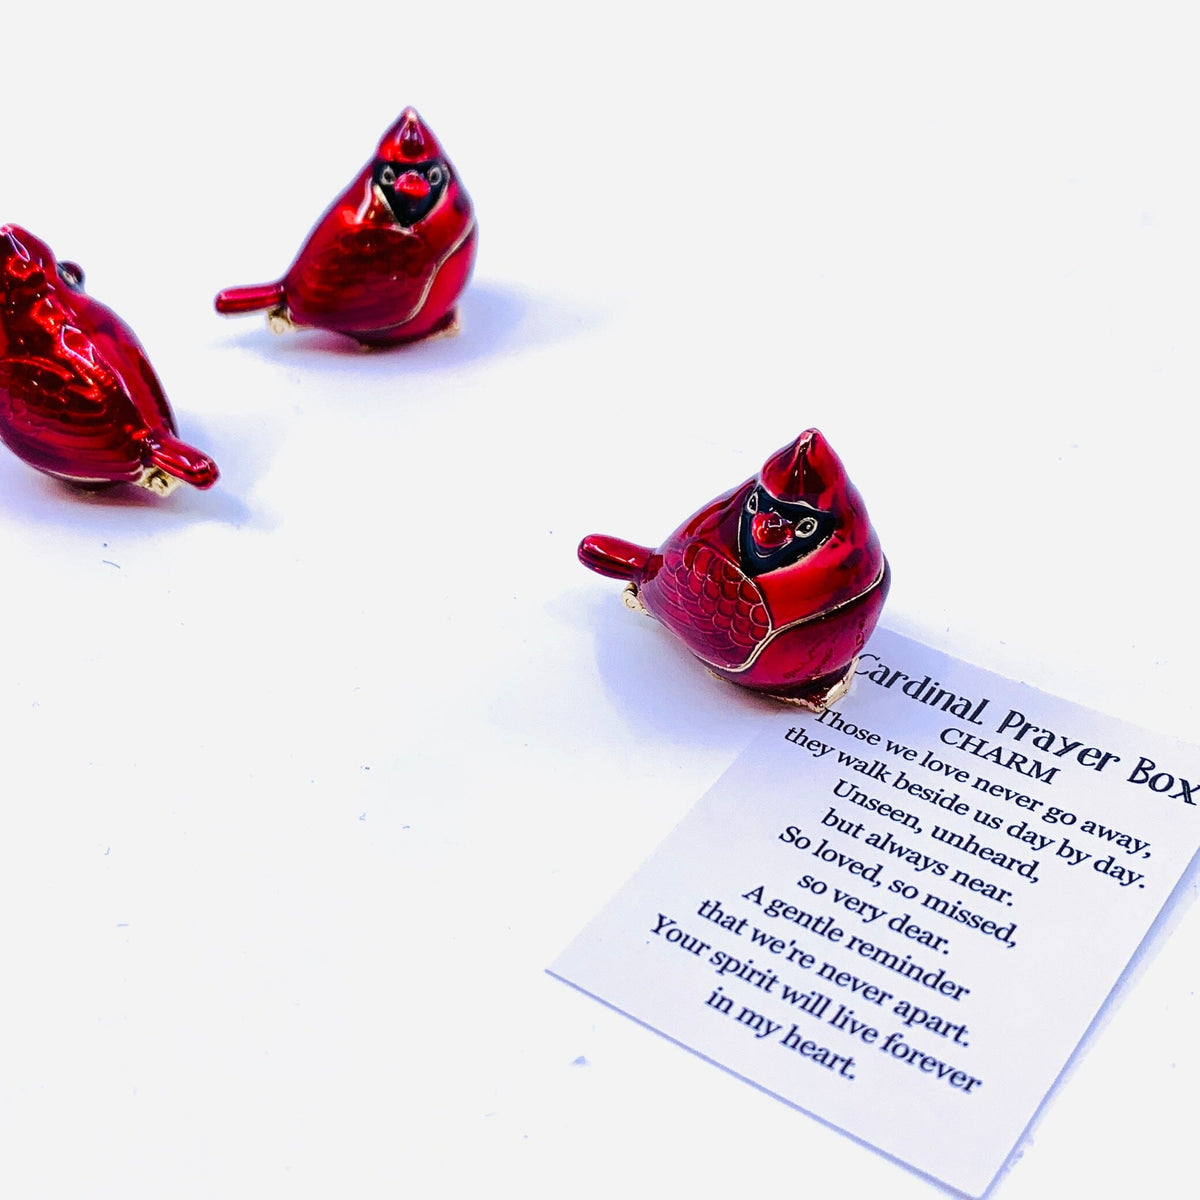 Cardinal Prayer Box Pocket Charm PT 91 Miniature GANZ 